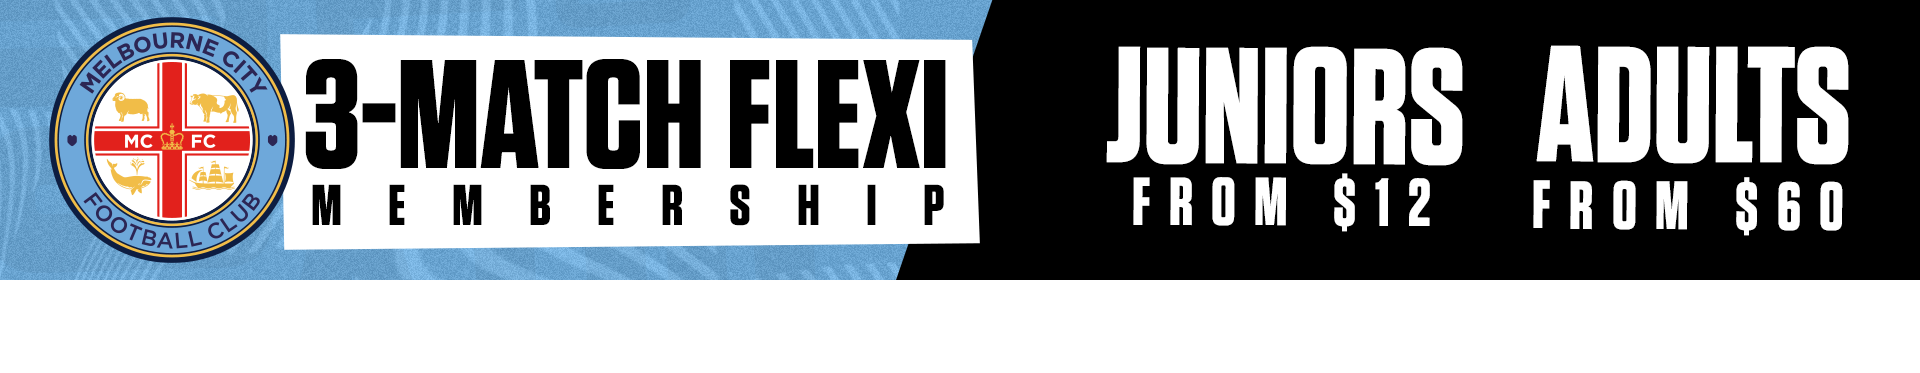 3-Match Flexi Memberships on sale